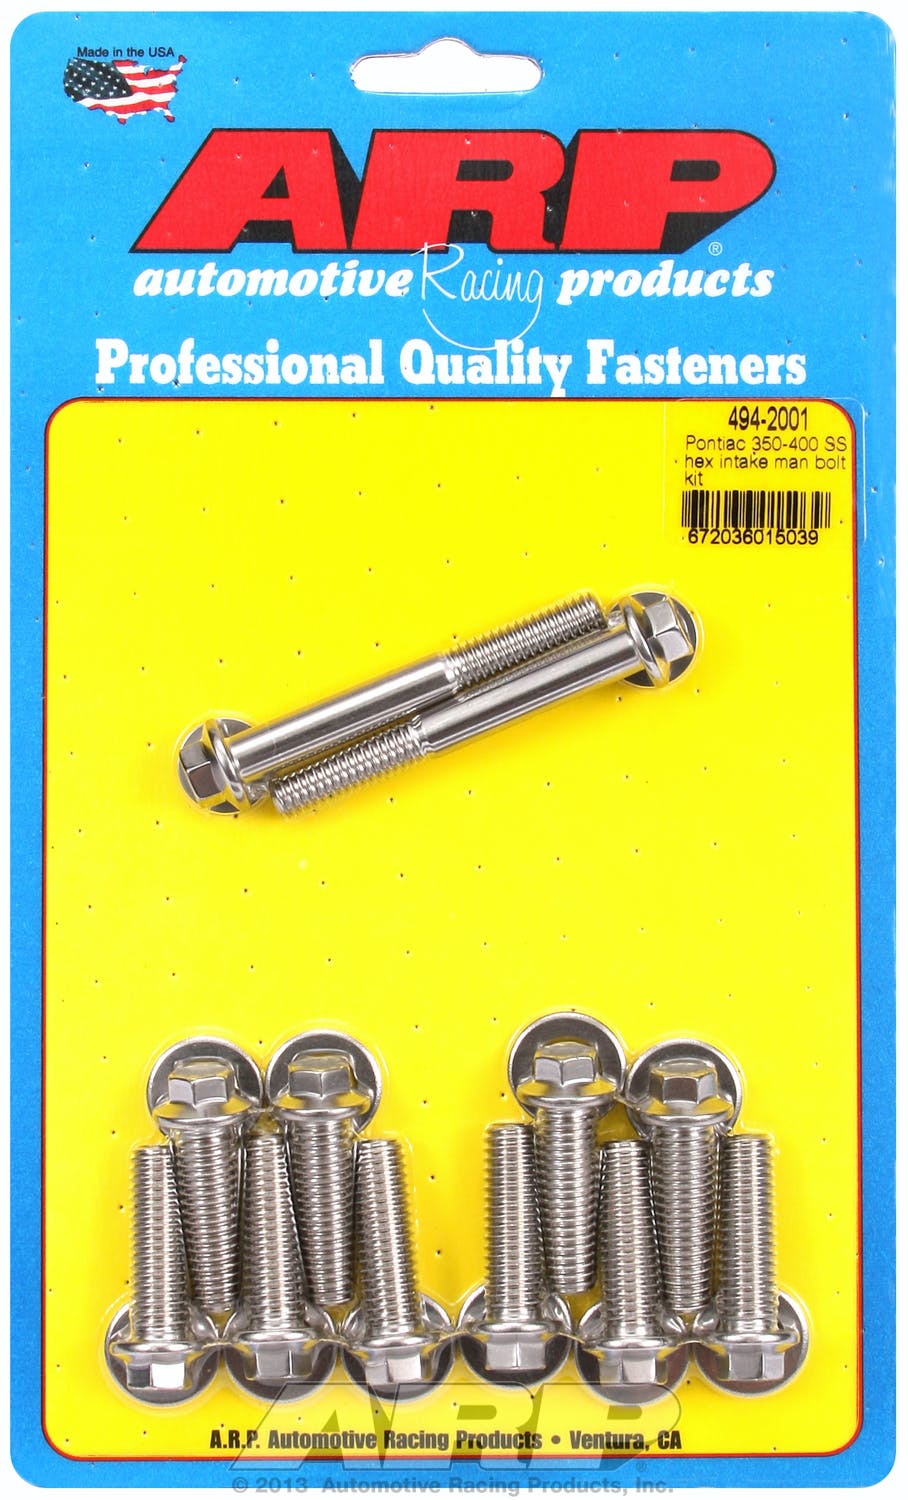 ARP 494-2001 350-400 Stainless Steel hex intake manifold bolt kit